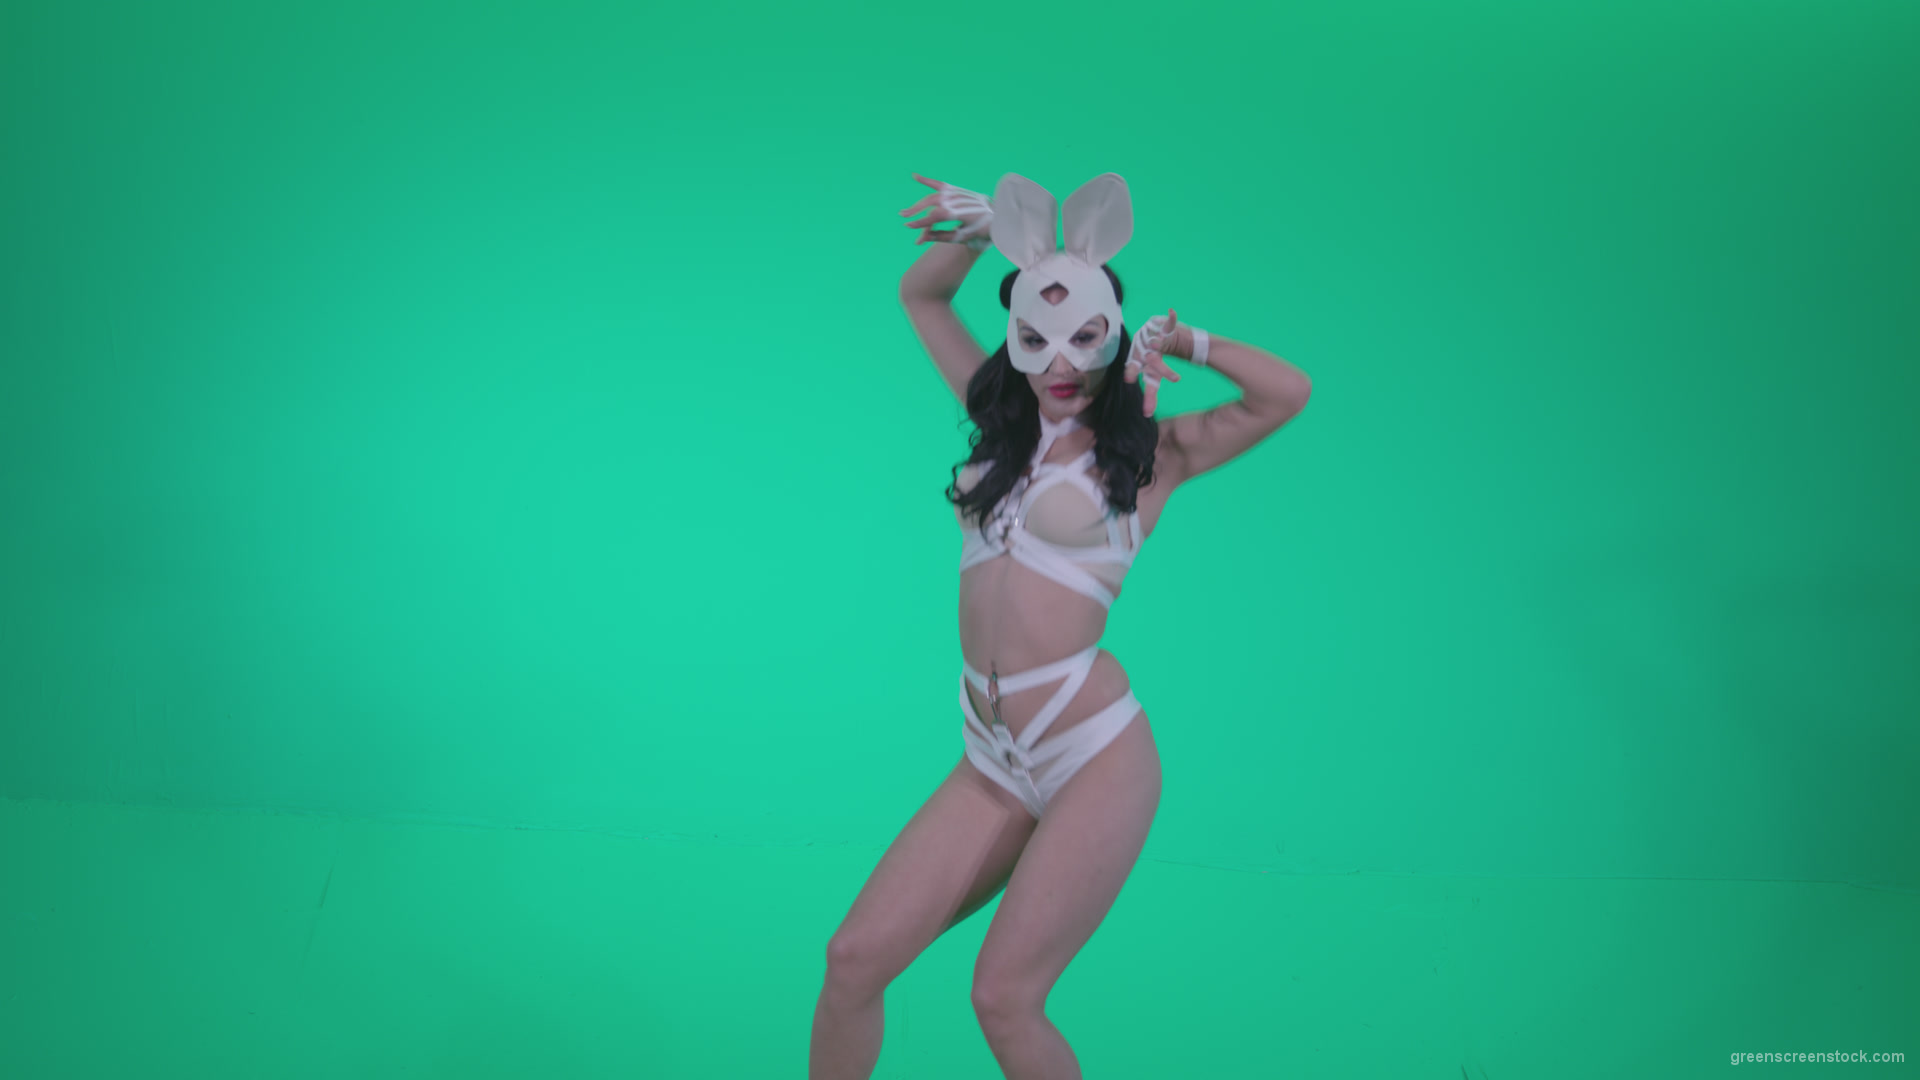 Go-go-Dancer-White-Rabbit-m11-Green-Screen-Video-Footage_007 Green Screen Stock